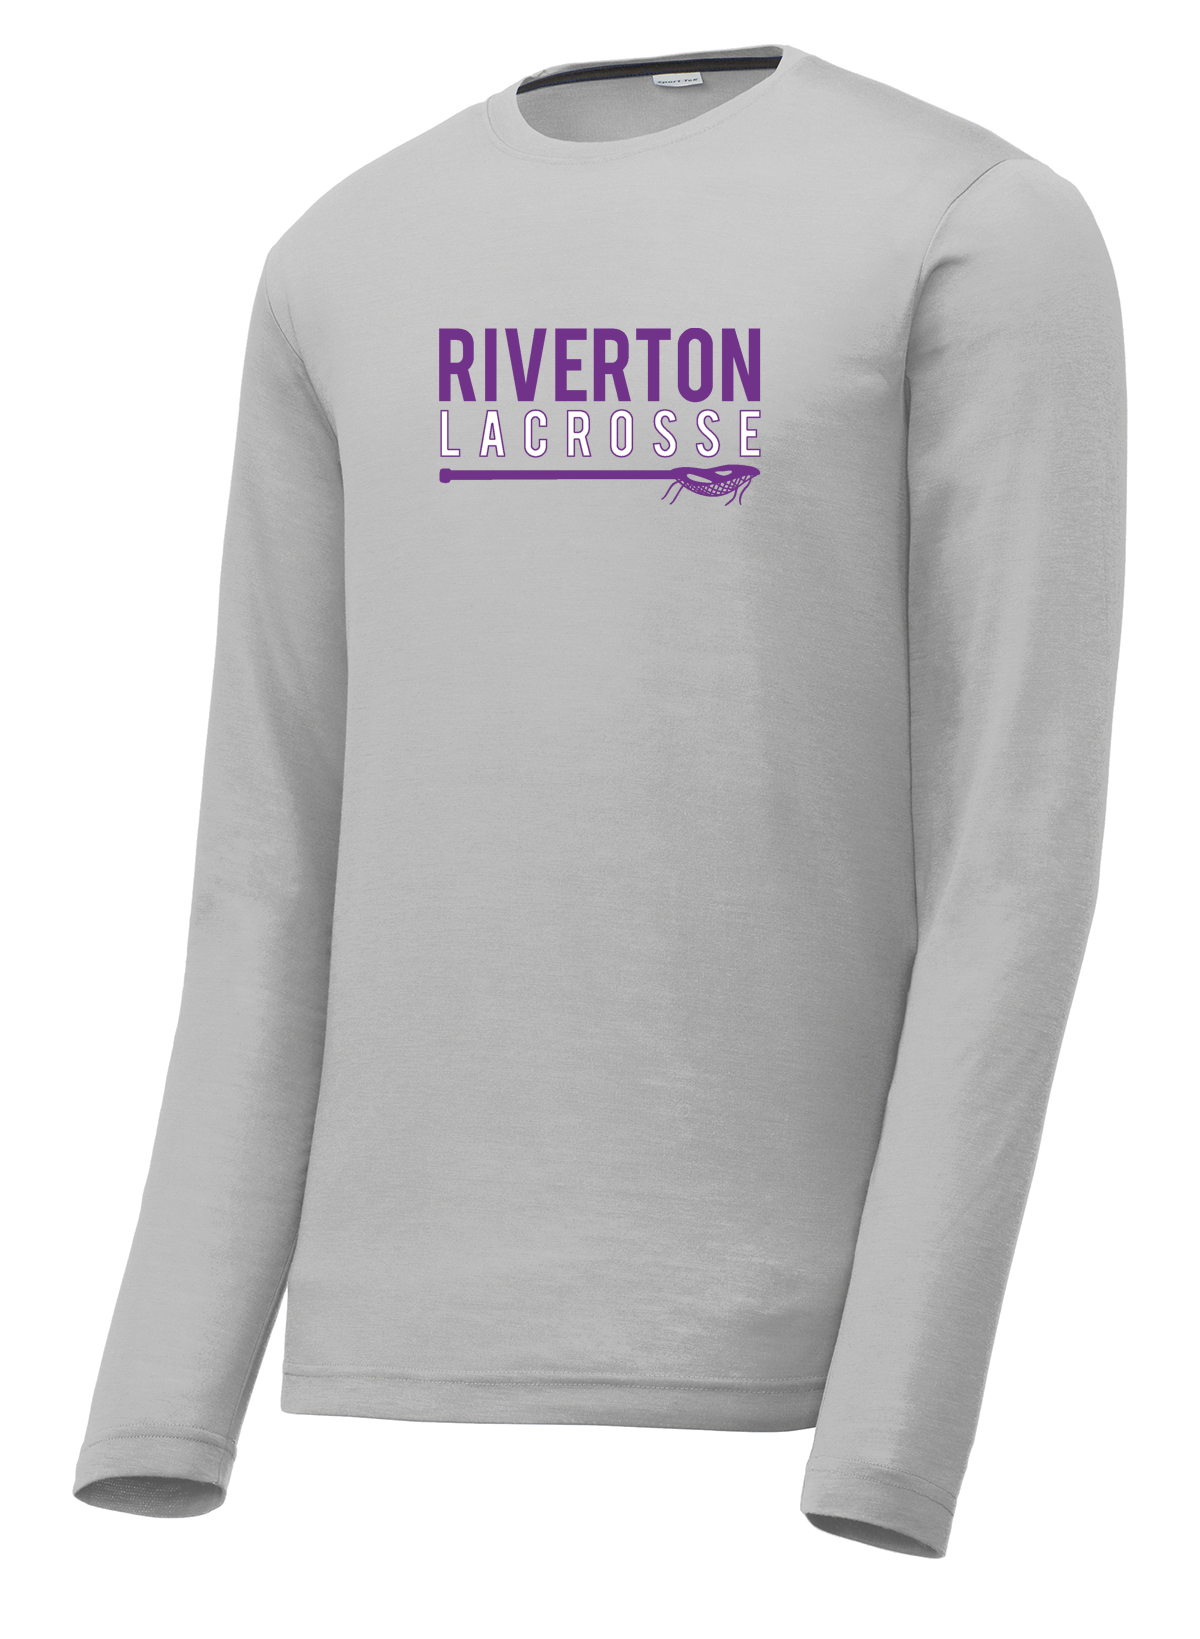 Riverton Lacrosse Long Sleeve CottonTouch Performance Shirt